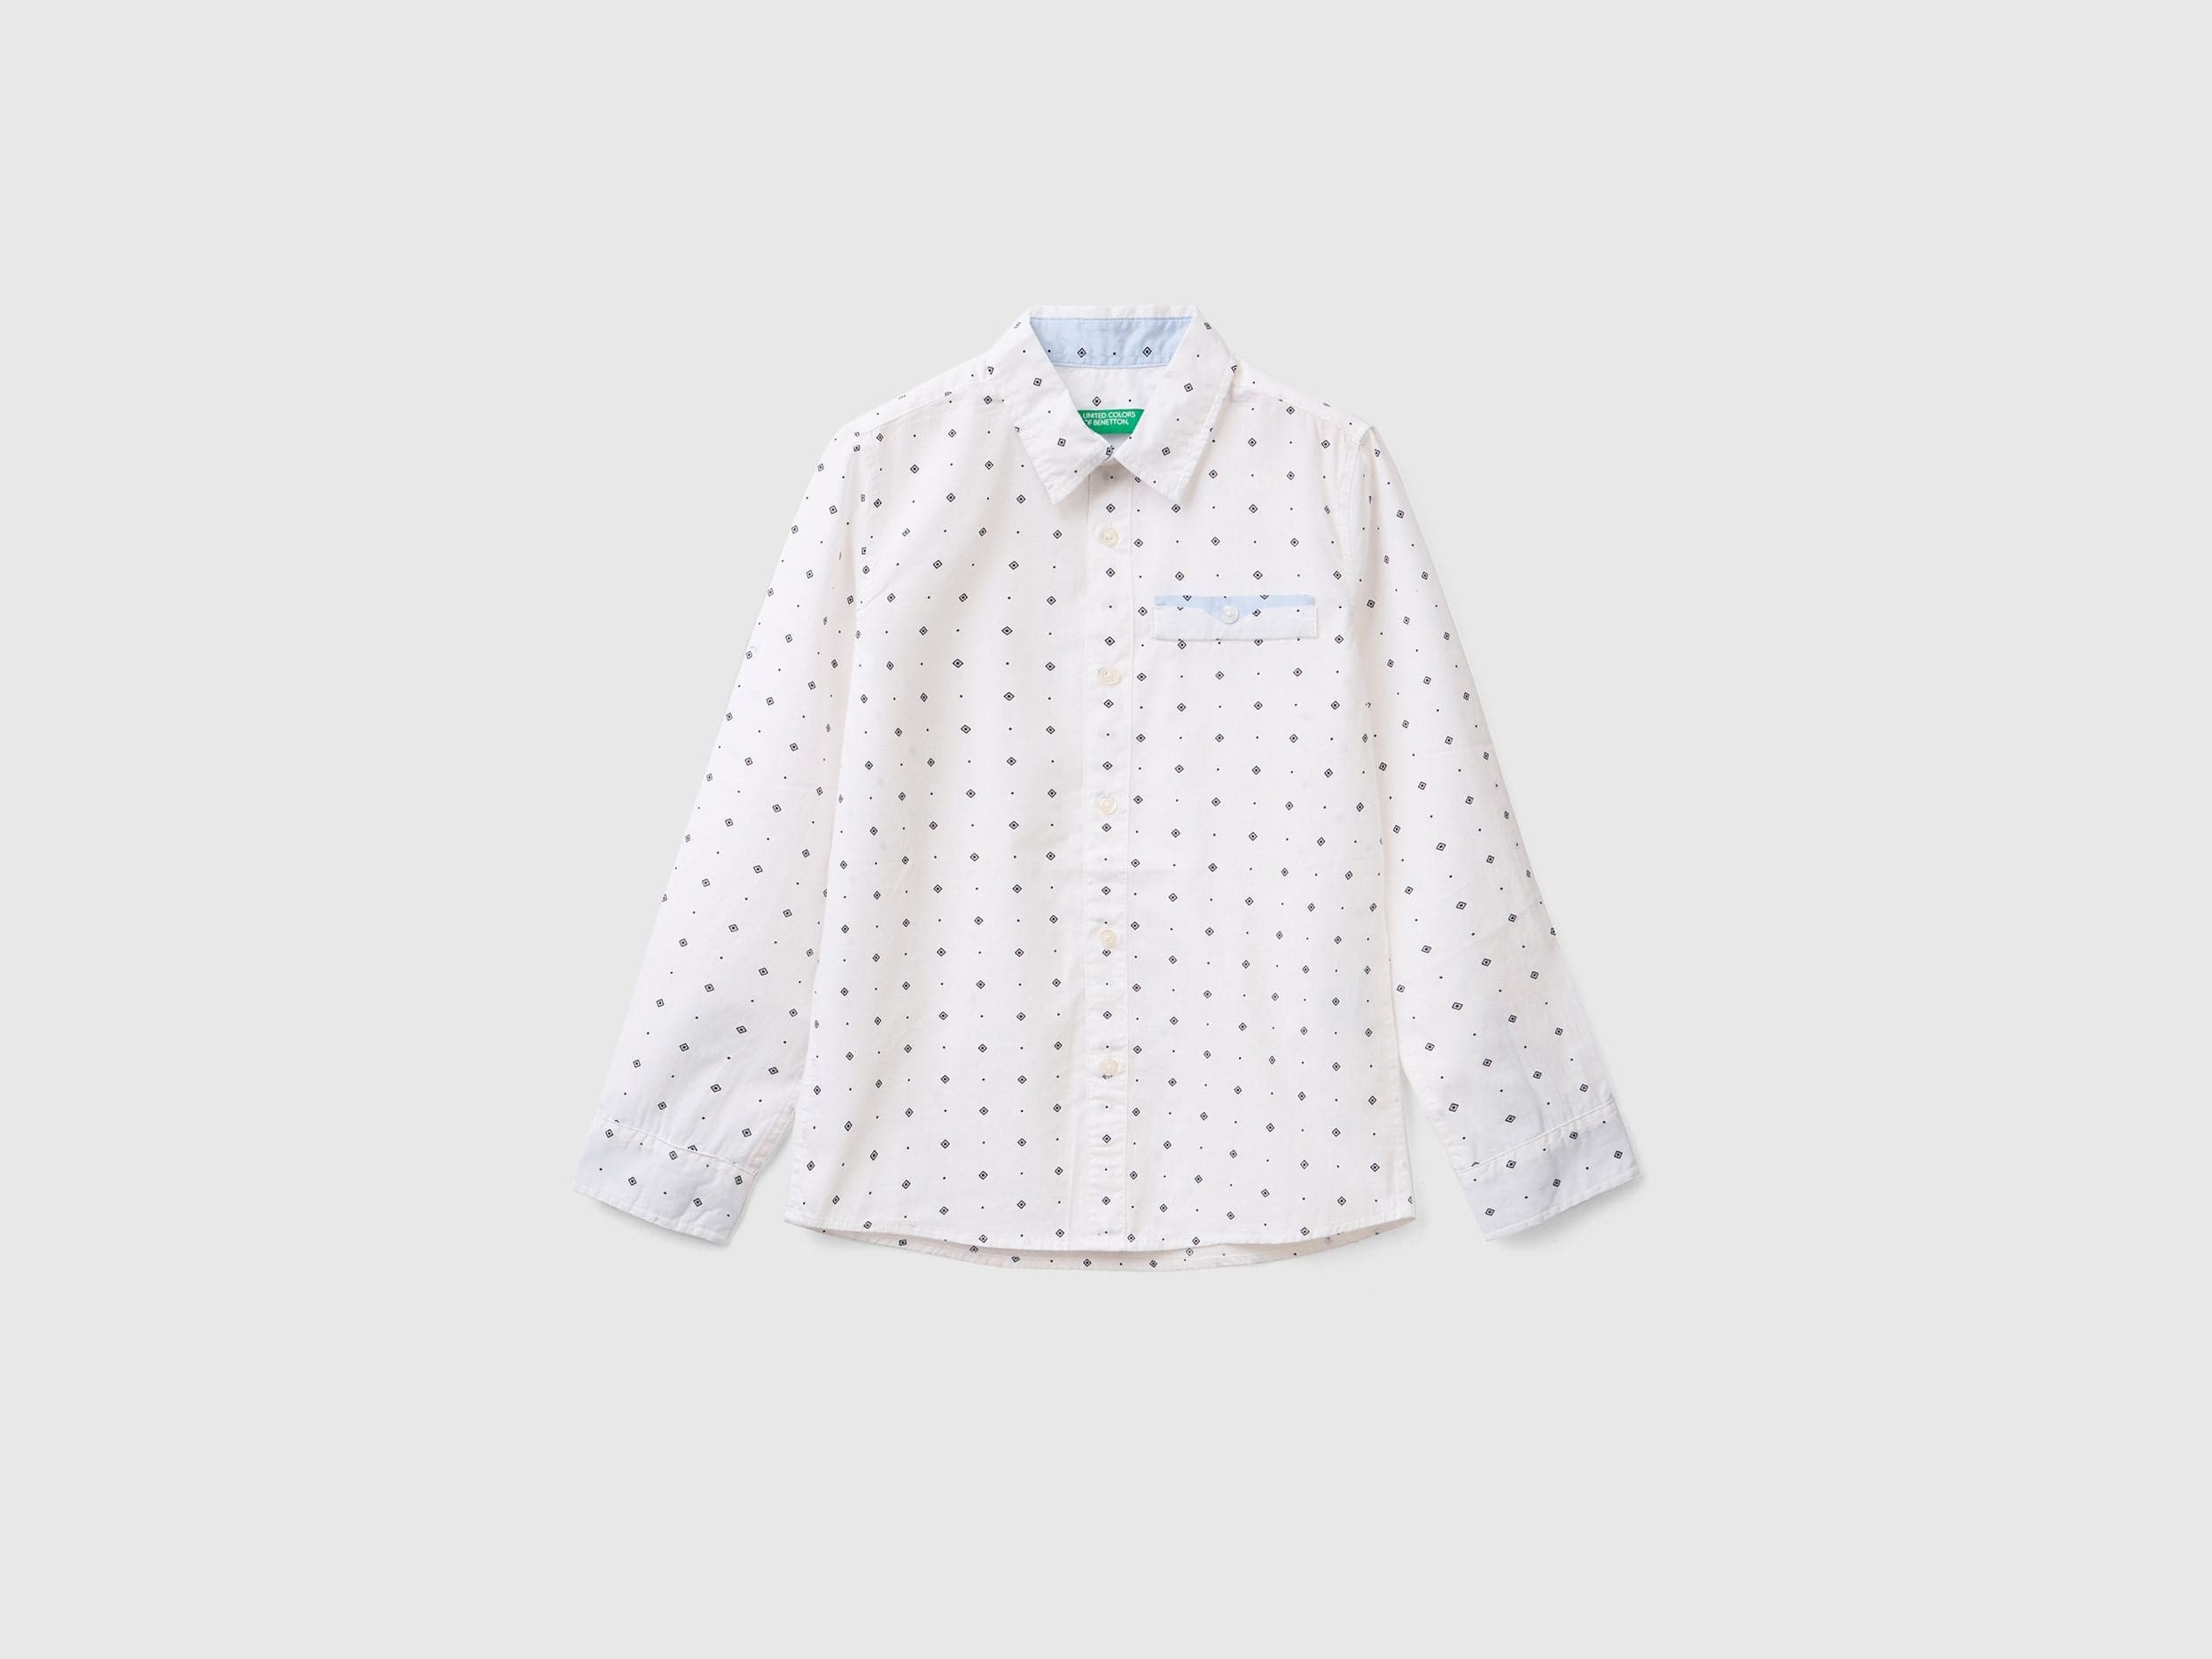 Micro patterned shirt